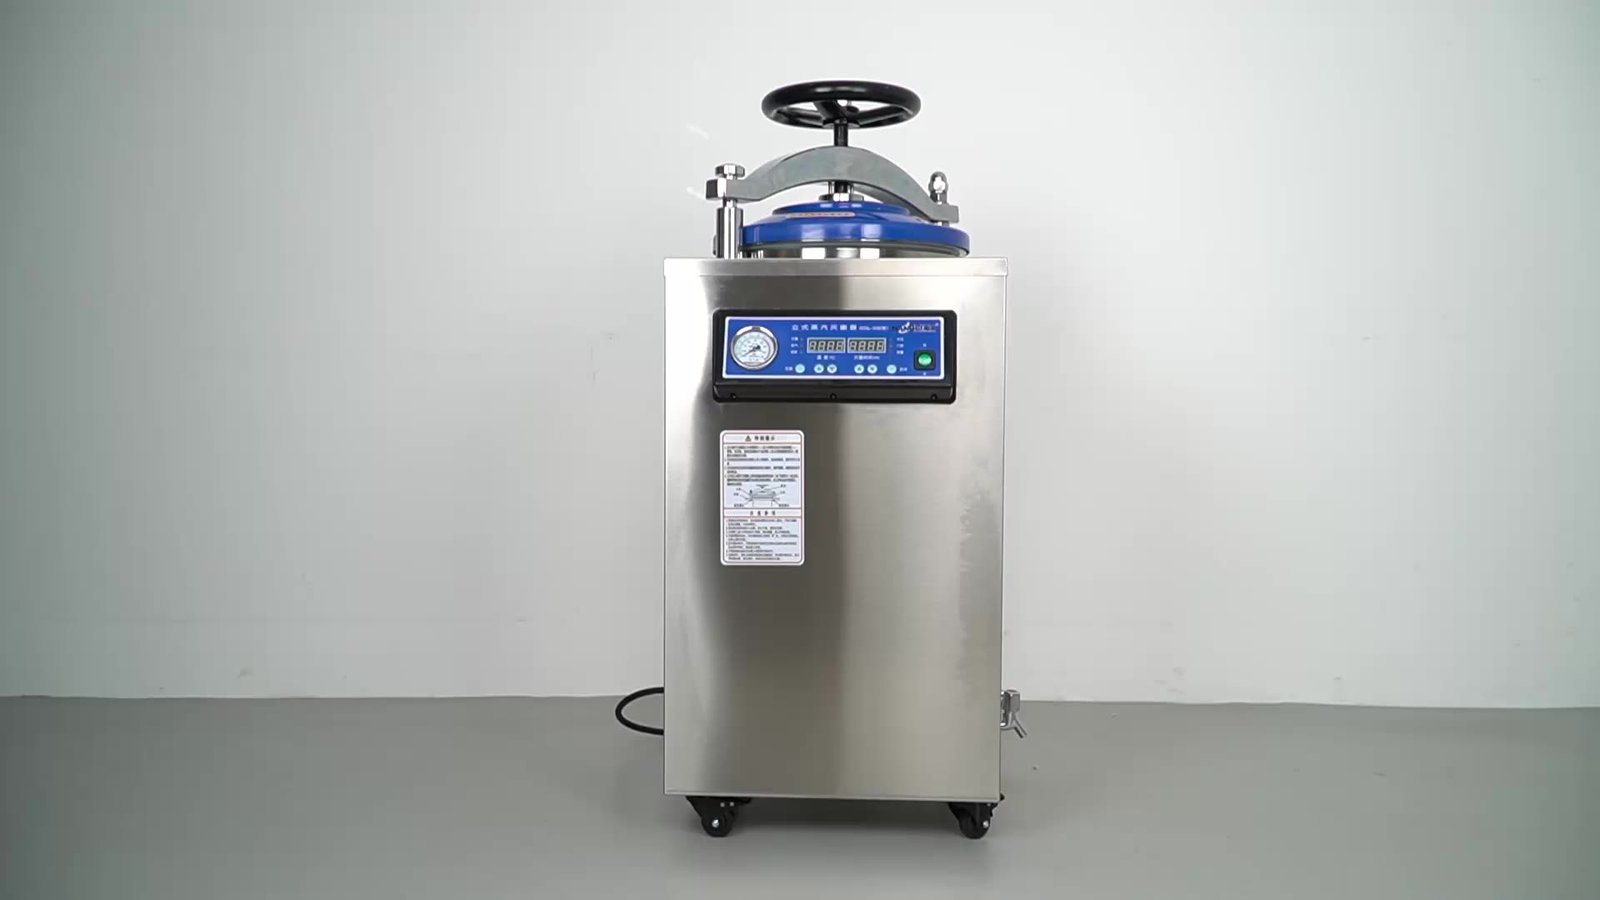 Vertical High Pressure Steam Sterilizer Autoclave at best price.